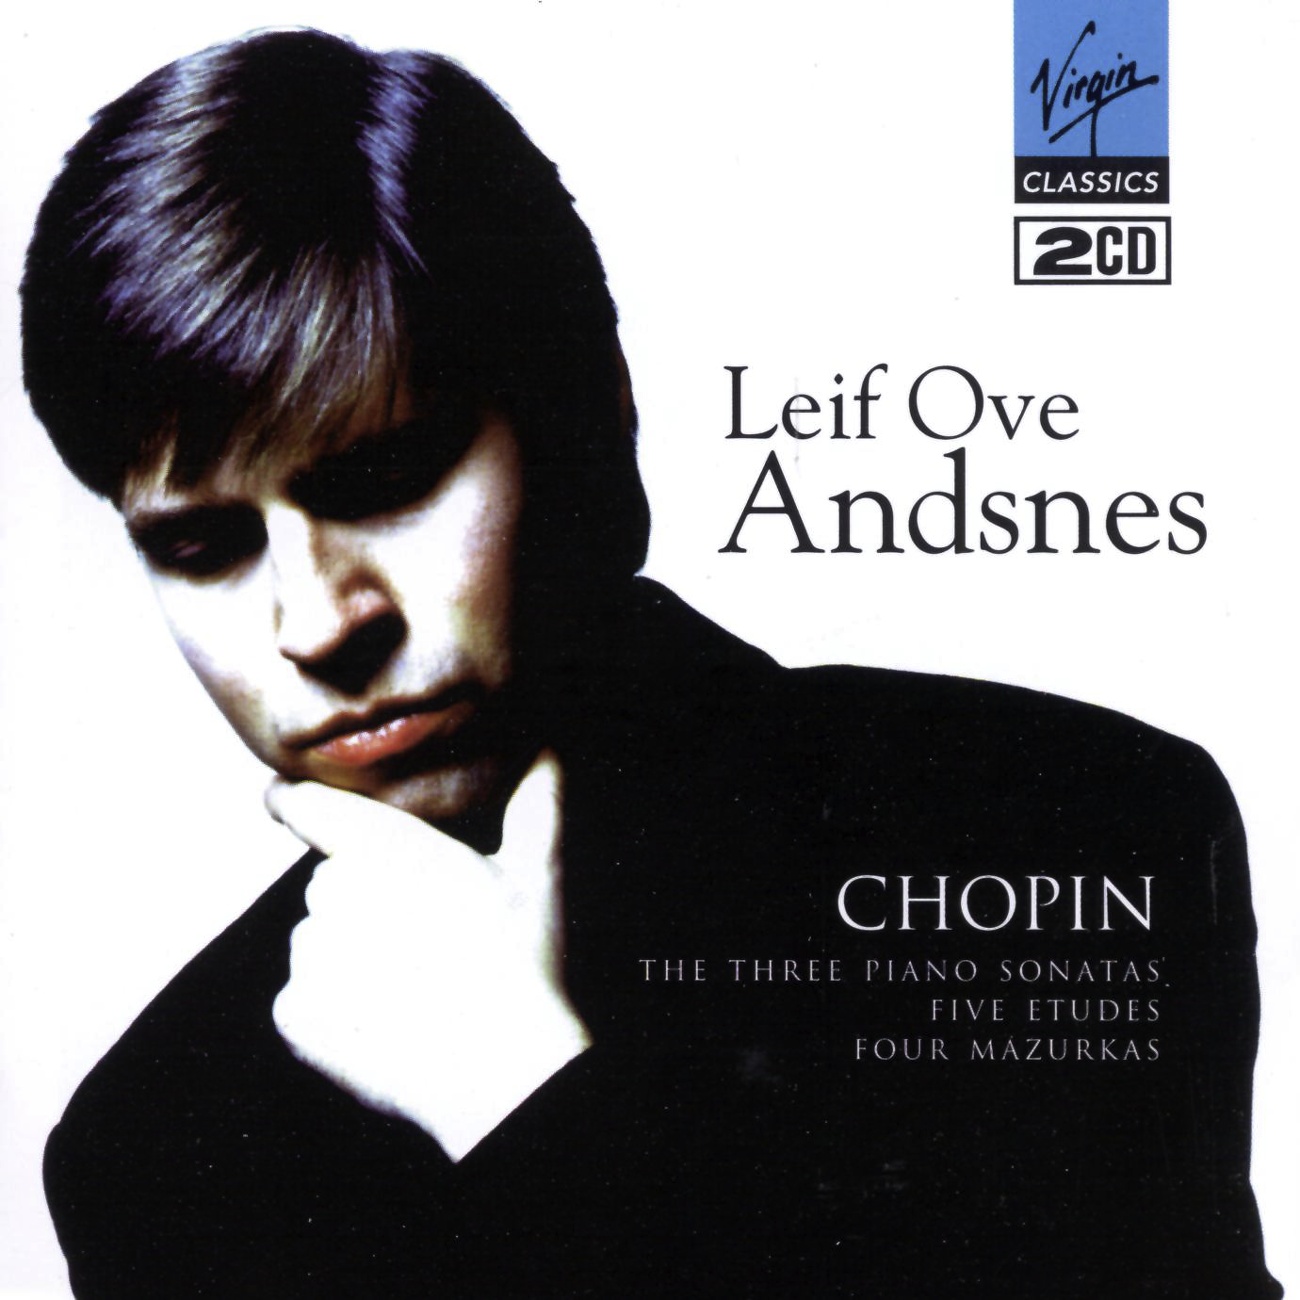 Chopin: Etude 3 In F, Op 25: Allegro